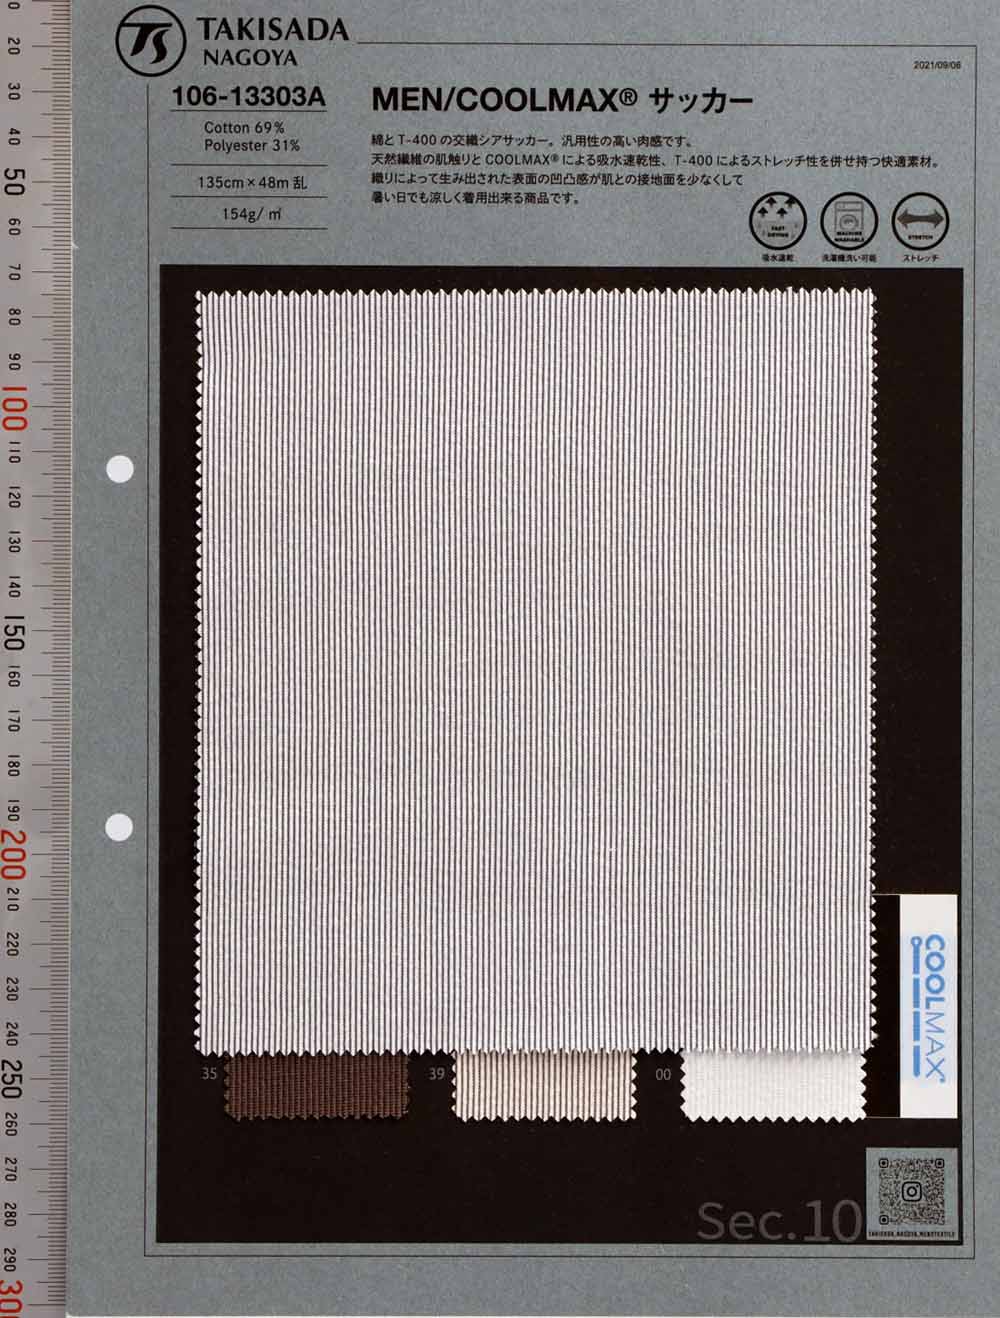 106-13303A HERREN / COOLMAX® Cordlane Seersucker[Textilgewebe] Takisada Nagoya